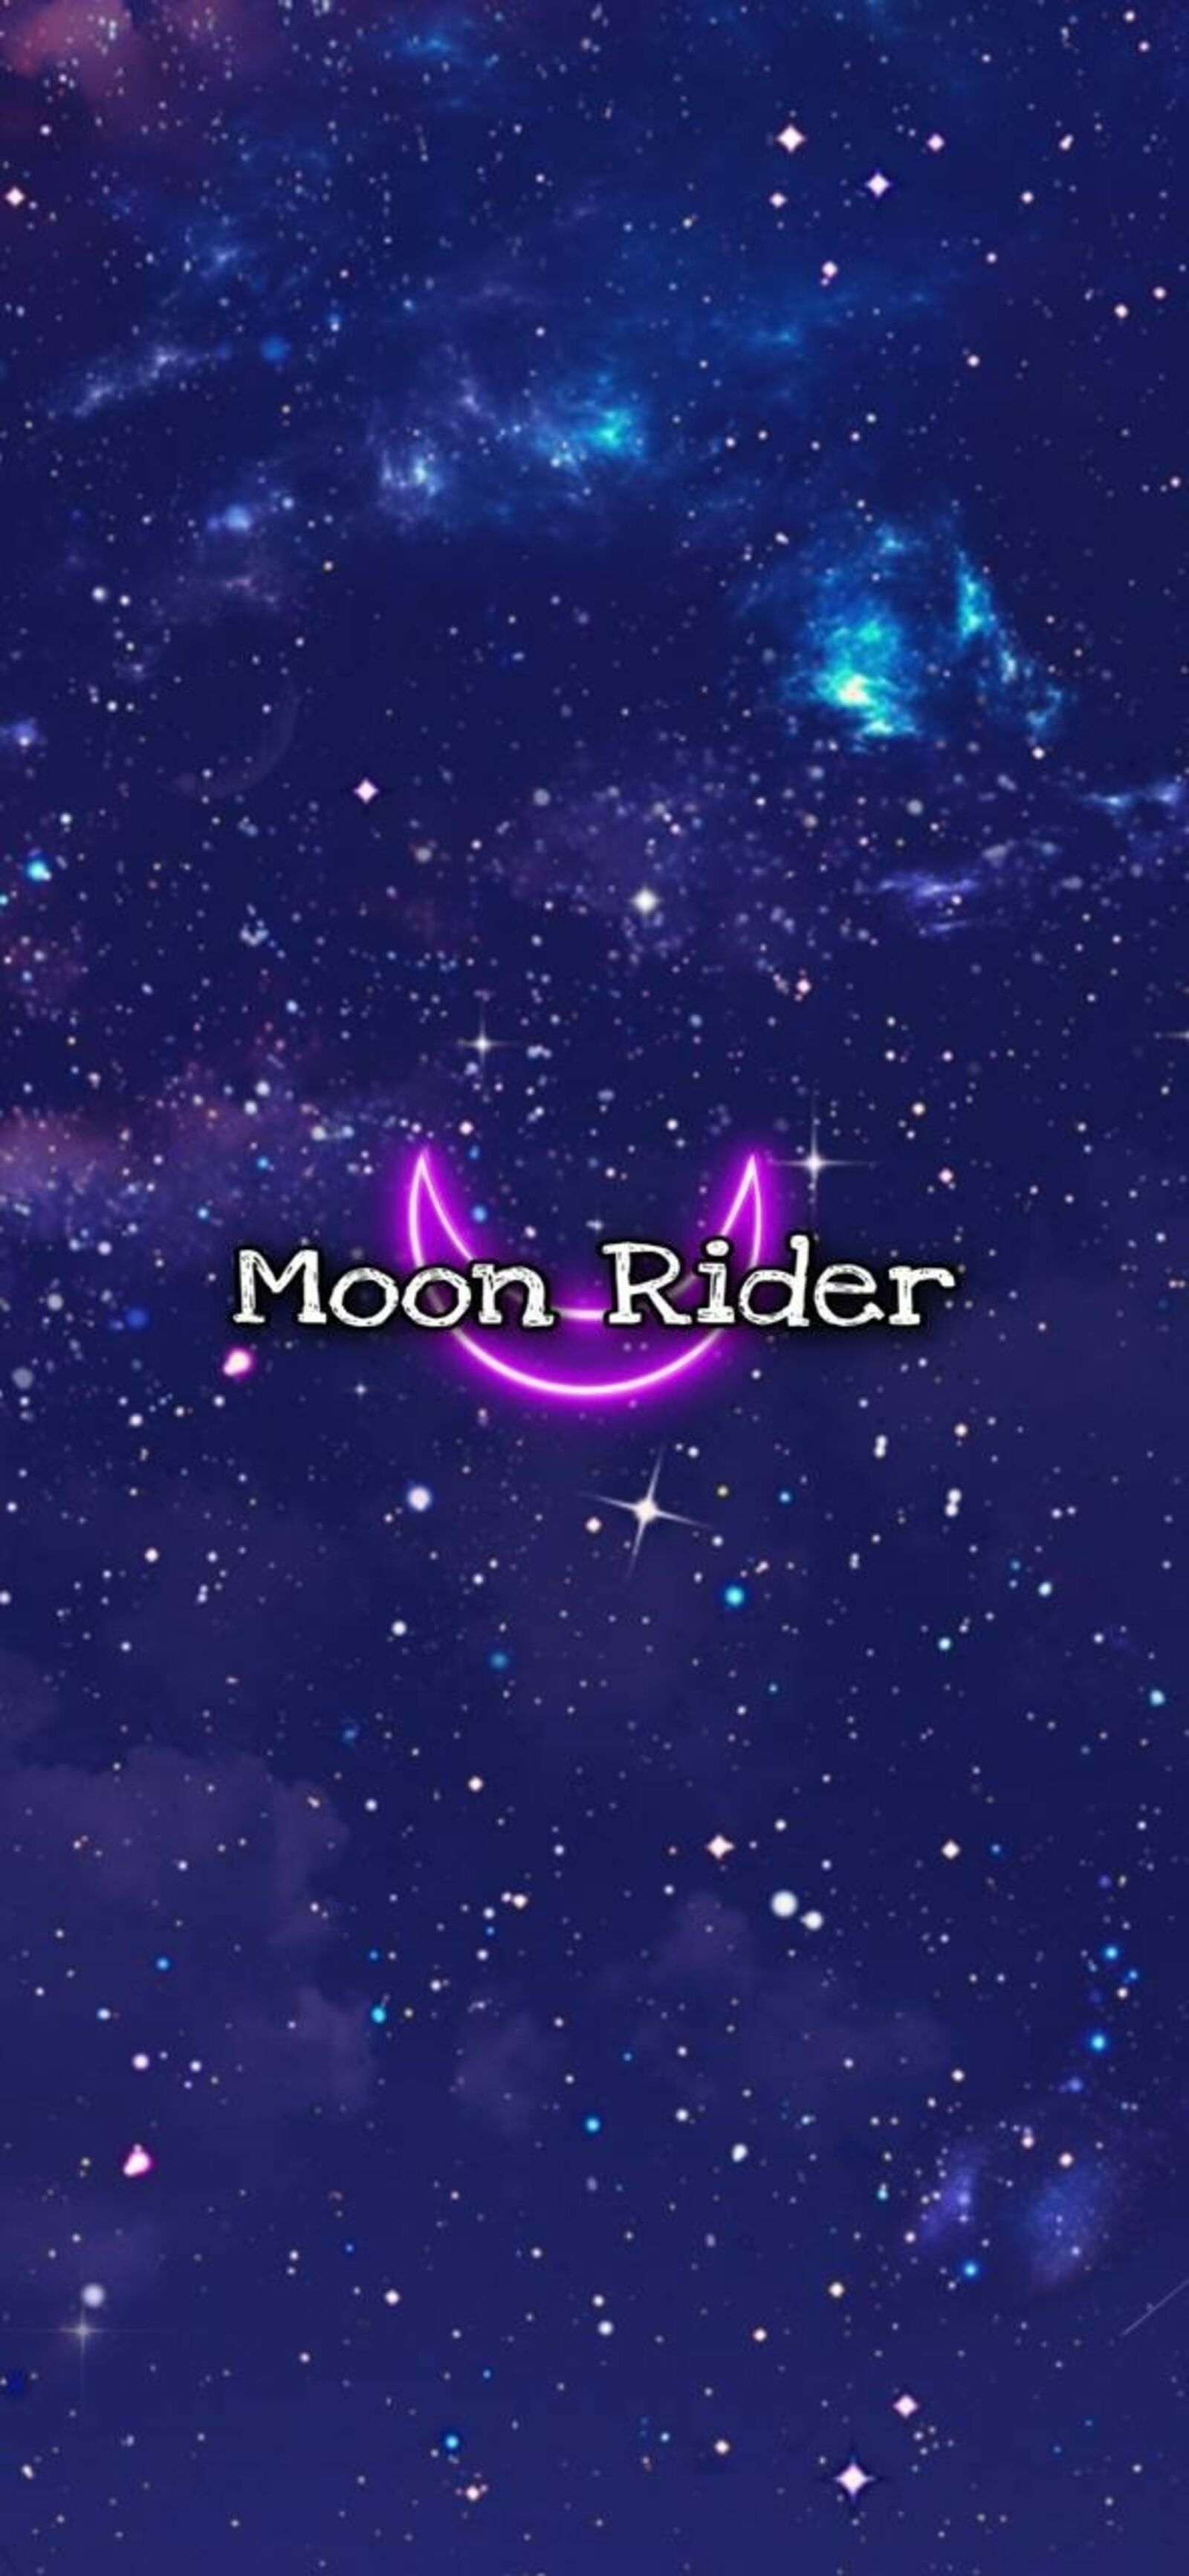 See Moon Rider profile